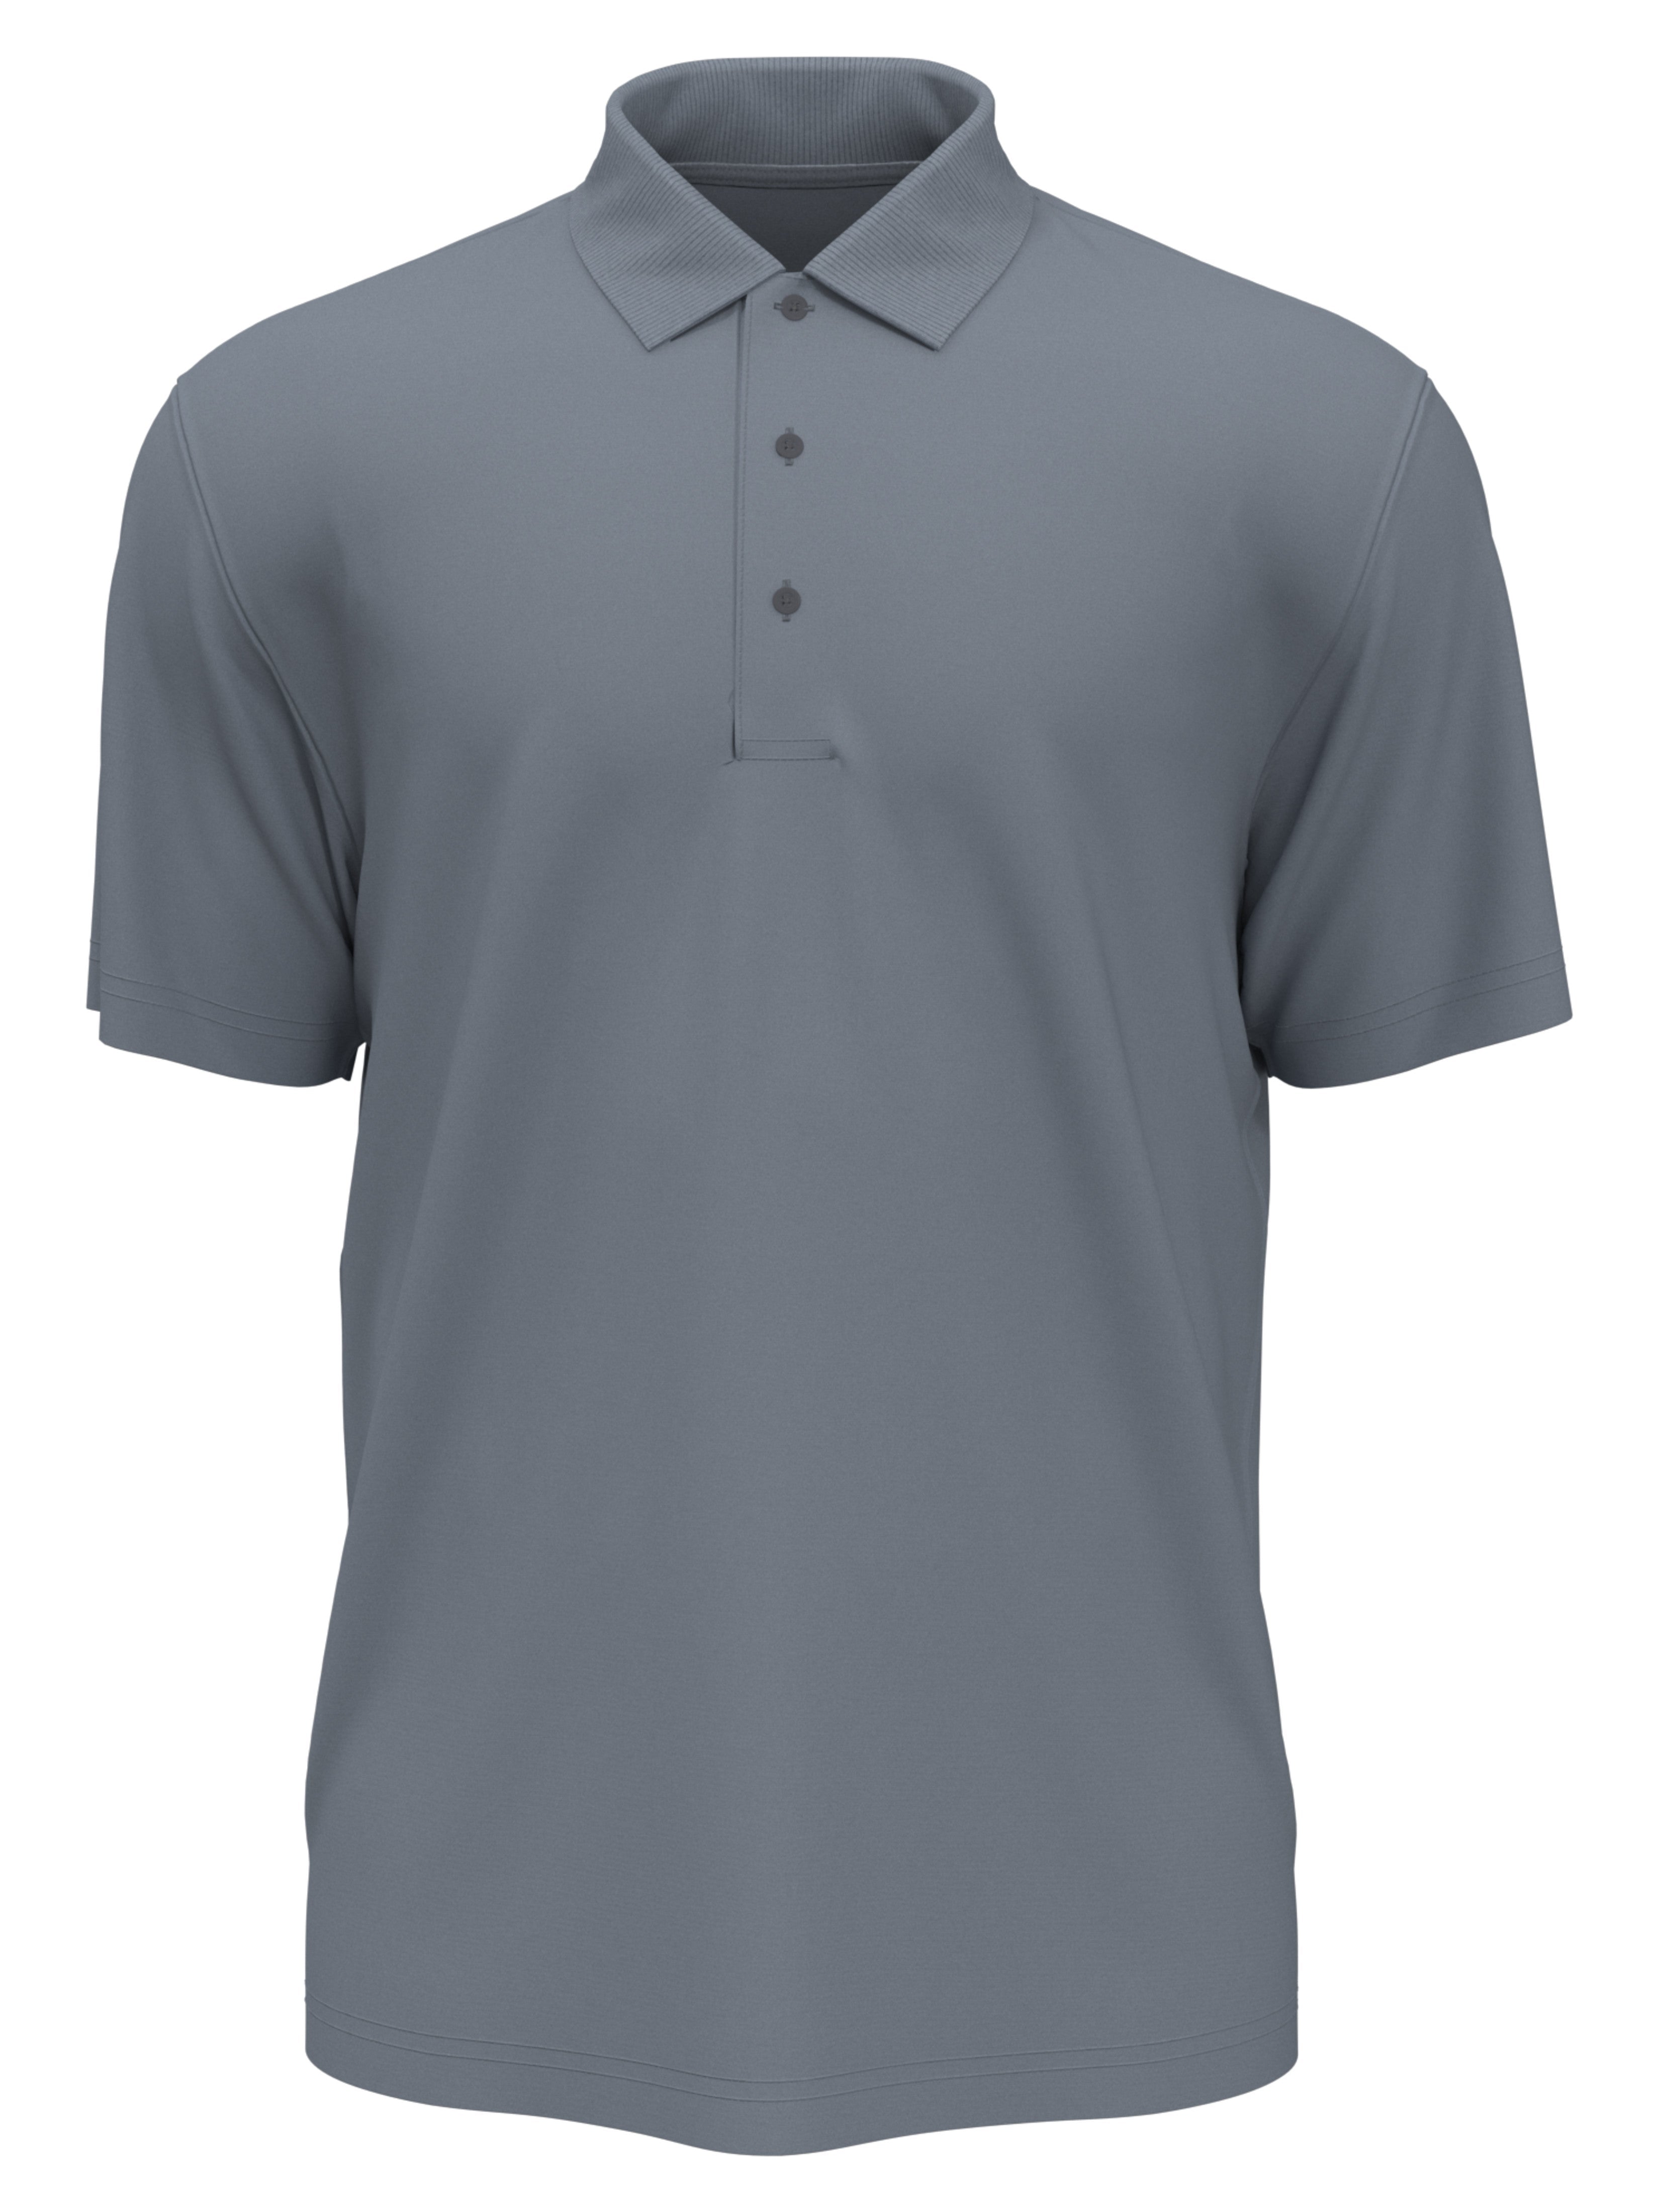 PGA TOUR Apparel Boys AirFlux™ Solid Mesh Golf Polo Shirt, Size Small, Tradewinds Gray, 100% Polyester | Golf Apparel Shop